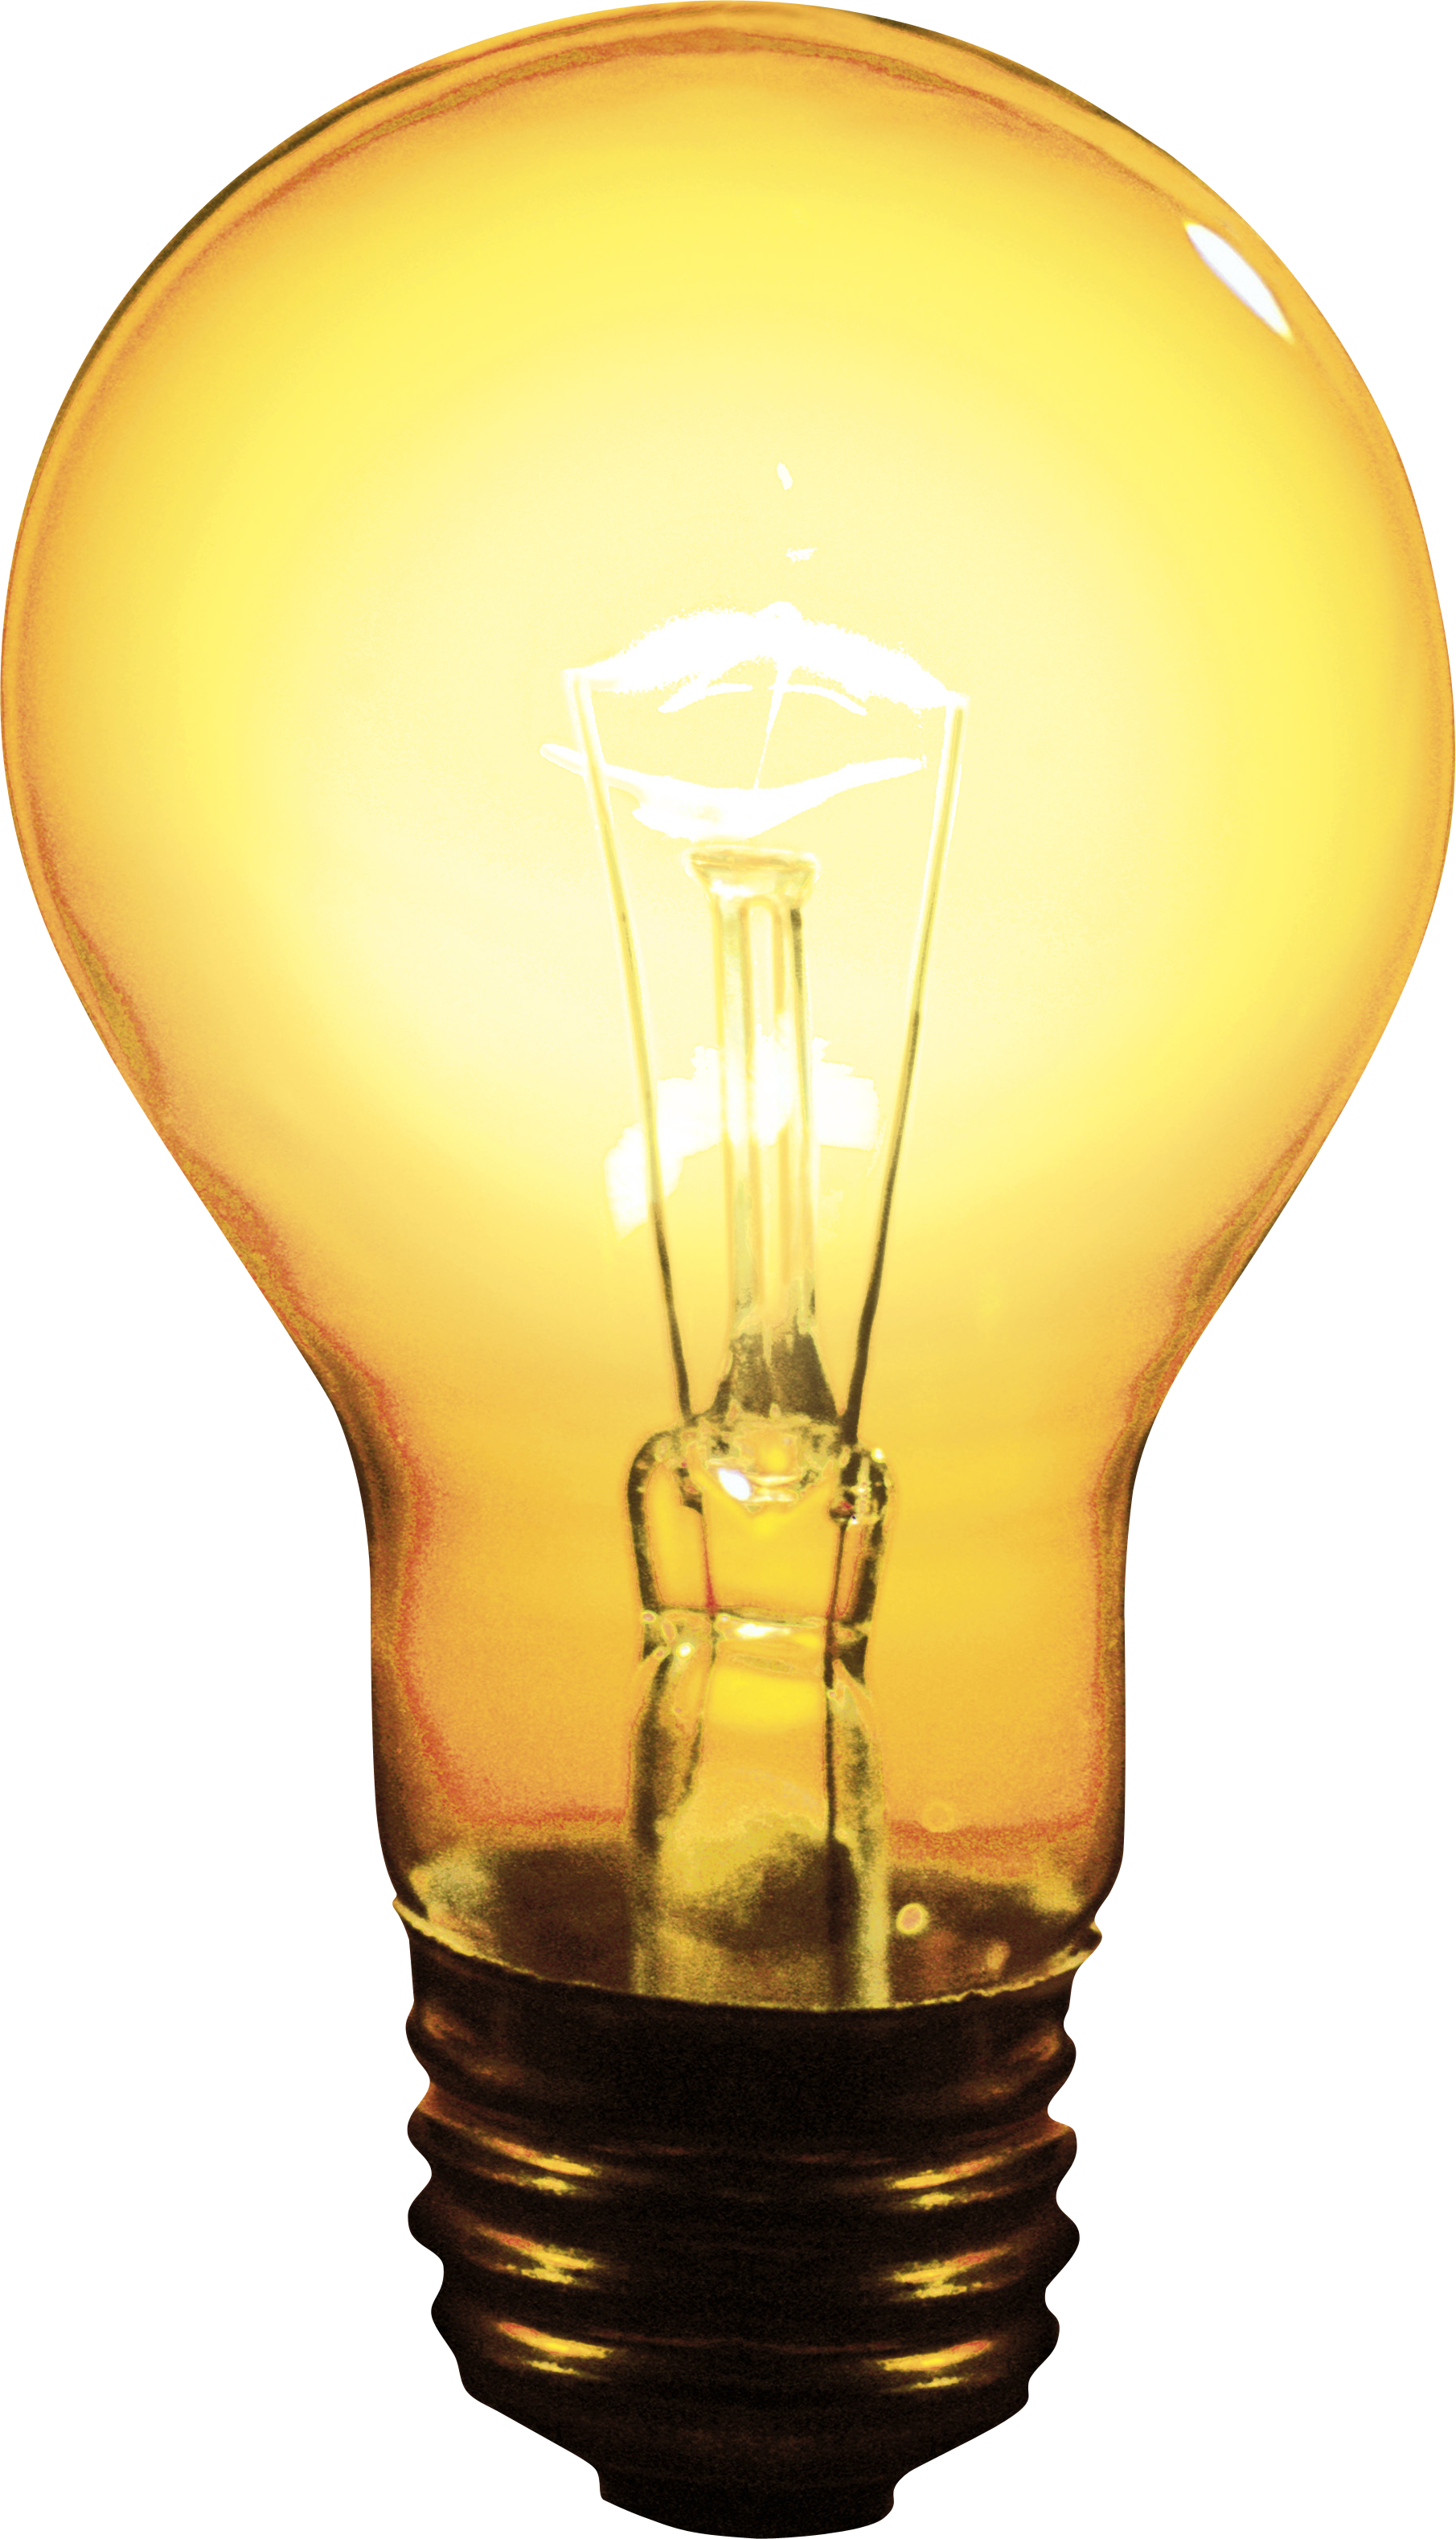 Lamp Download Transparent PNG Image